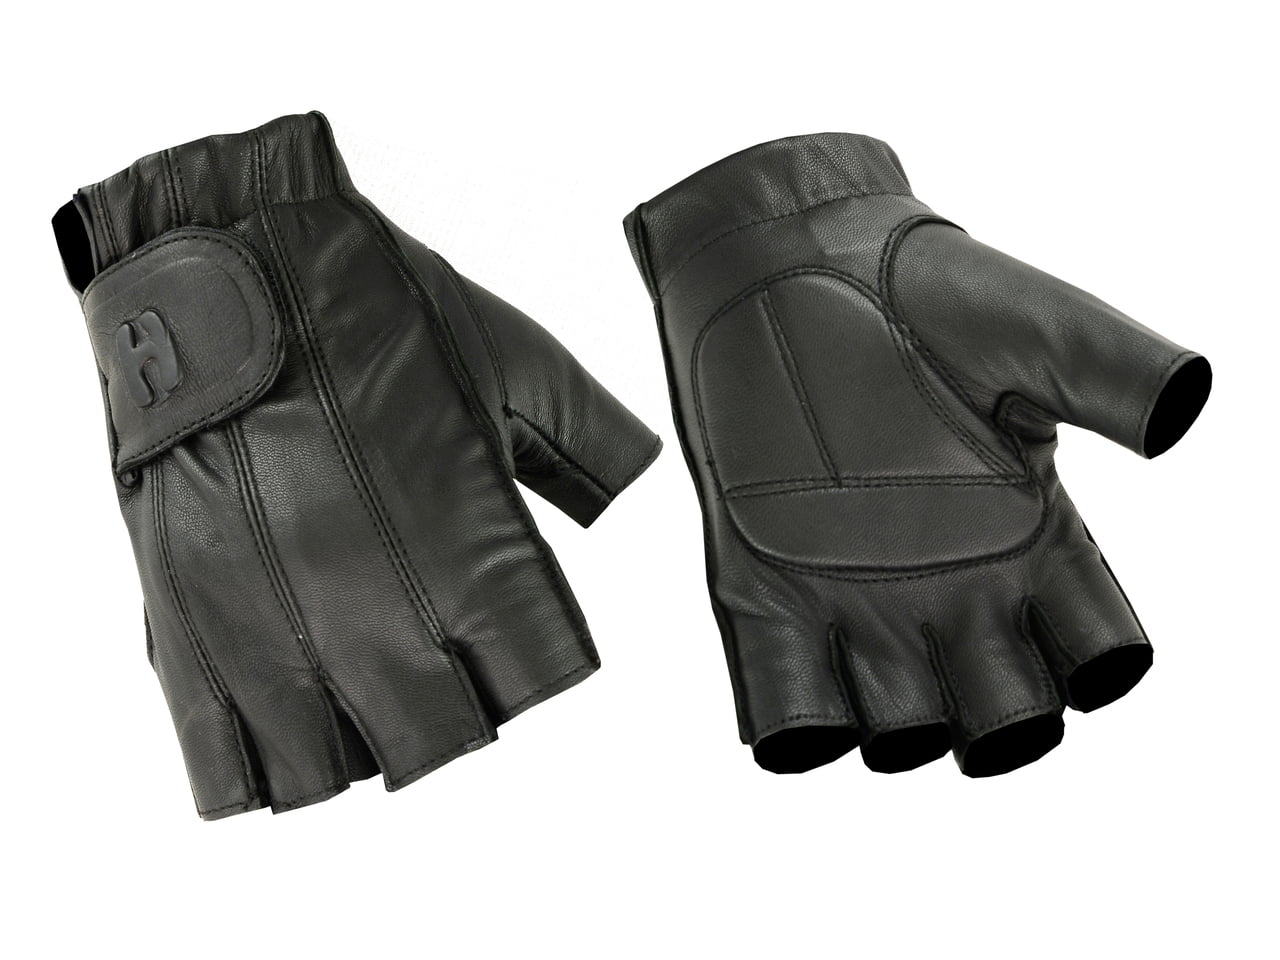 Men’s Fingerless Mechanics Glove w/ Amara Bottom & Gel Palm SH44610 